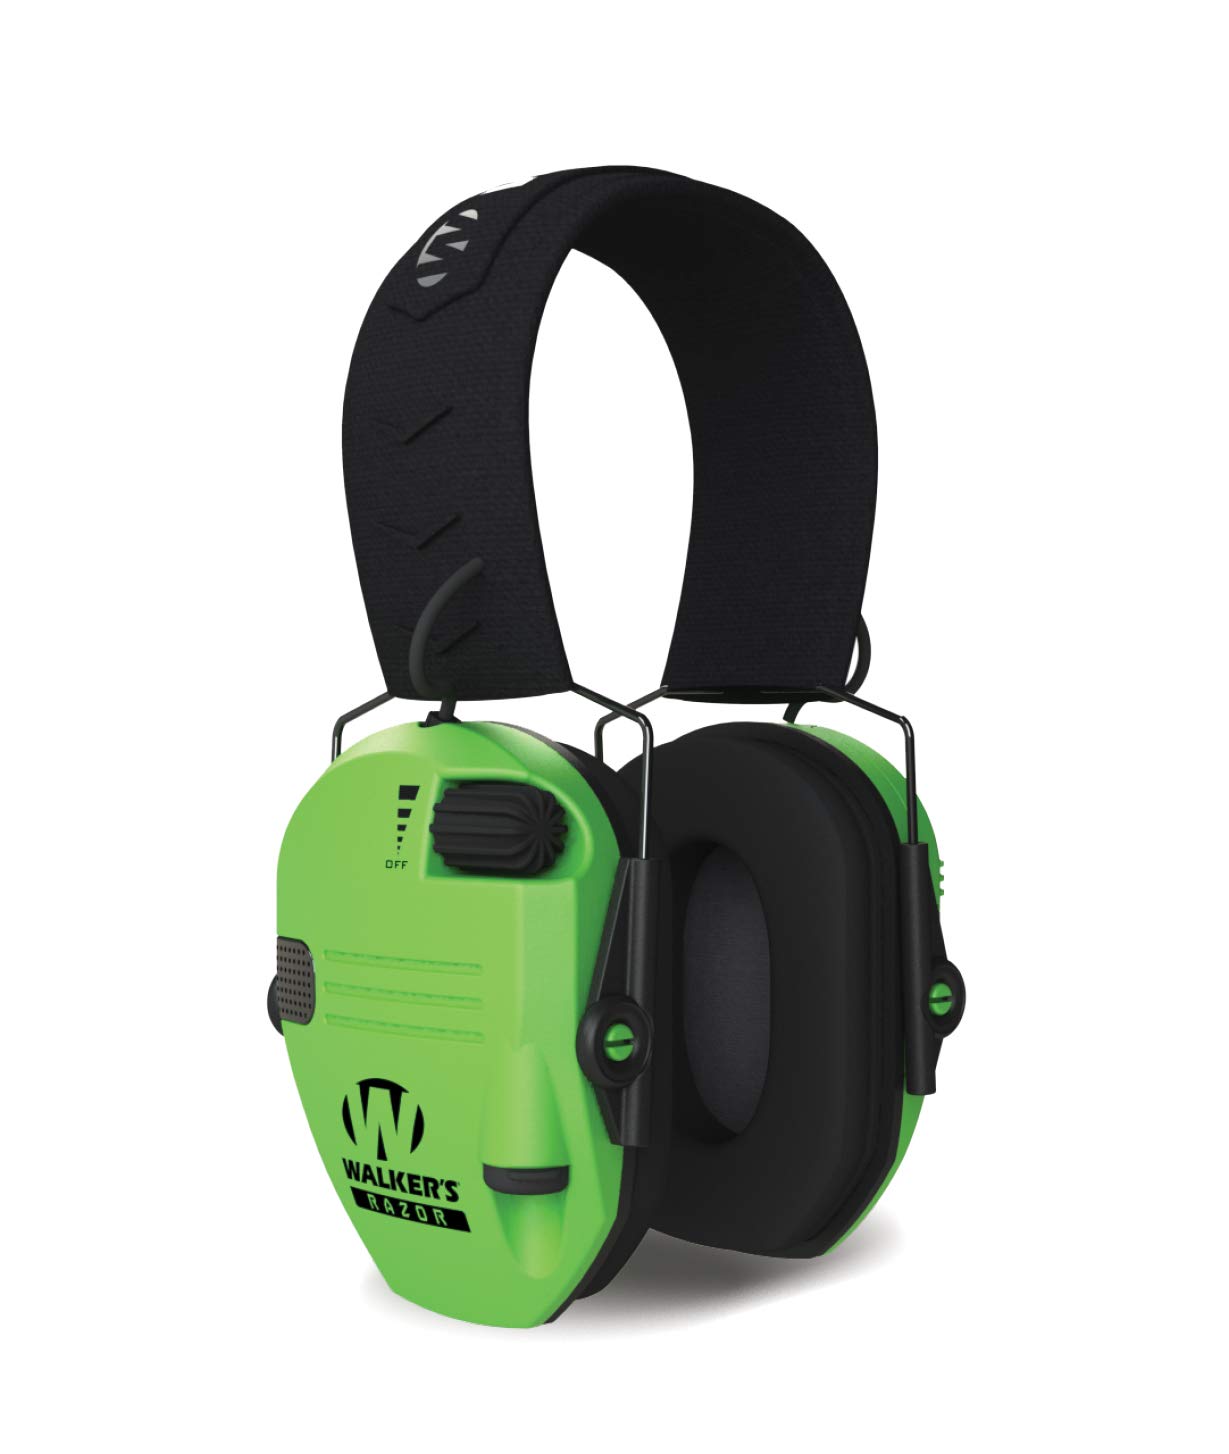 Walker's Game Ear Saftey Razor Slim Electronic Muff, Hi-Viz Green, One Size